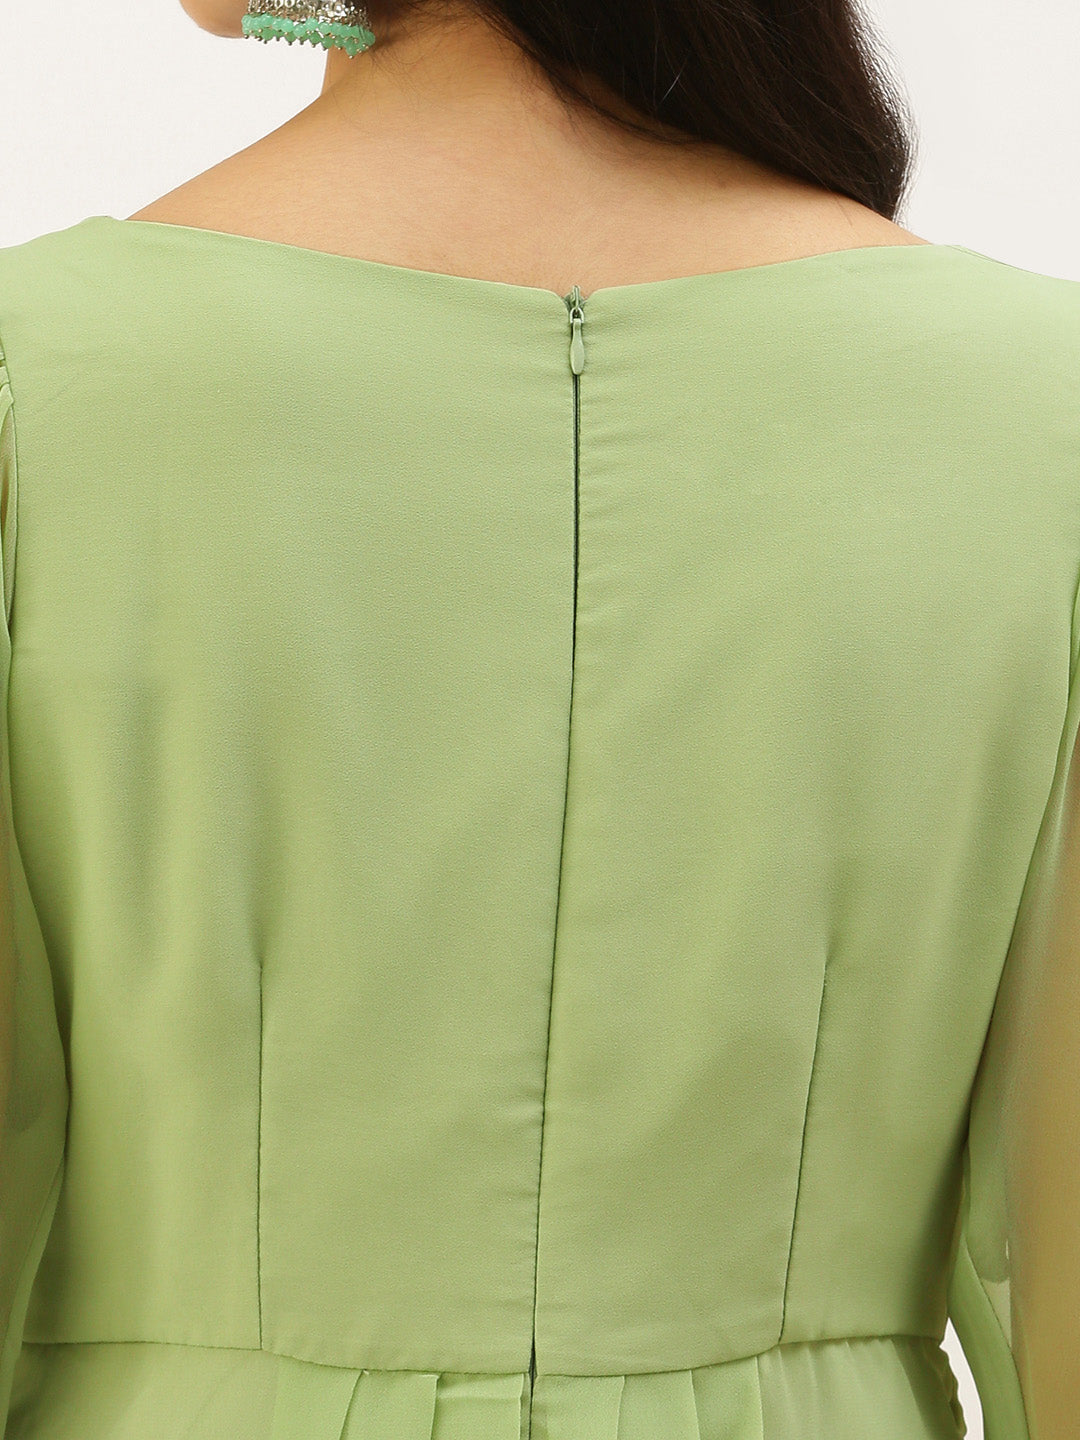 Green-Digital-Printed-Dress